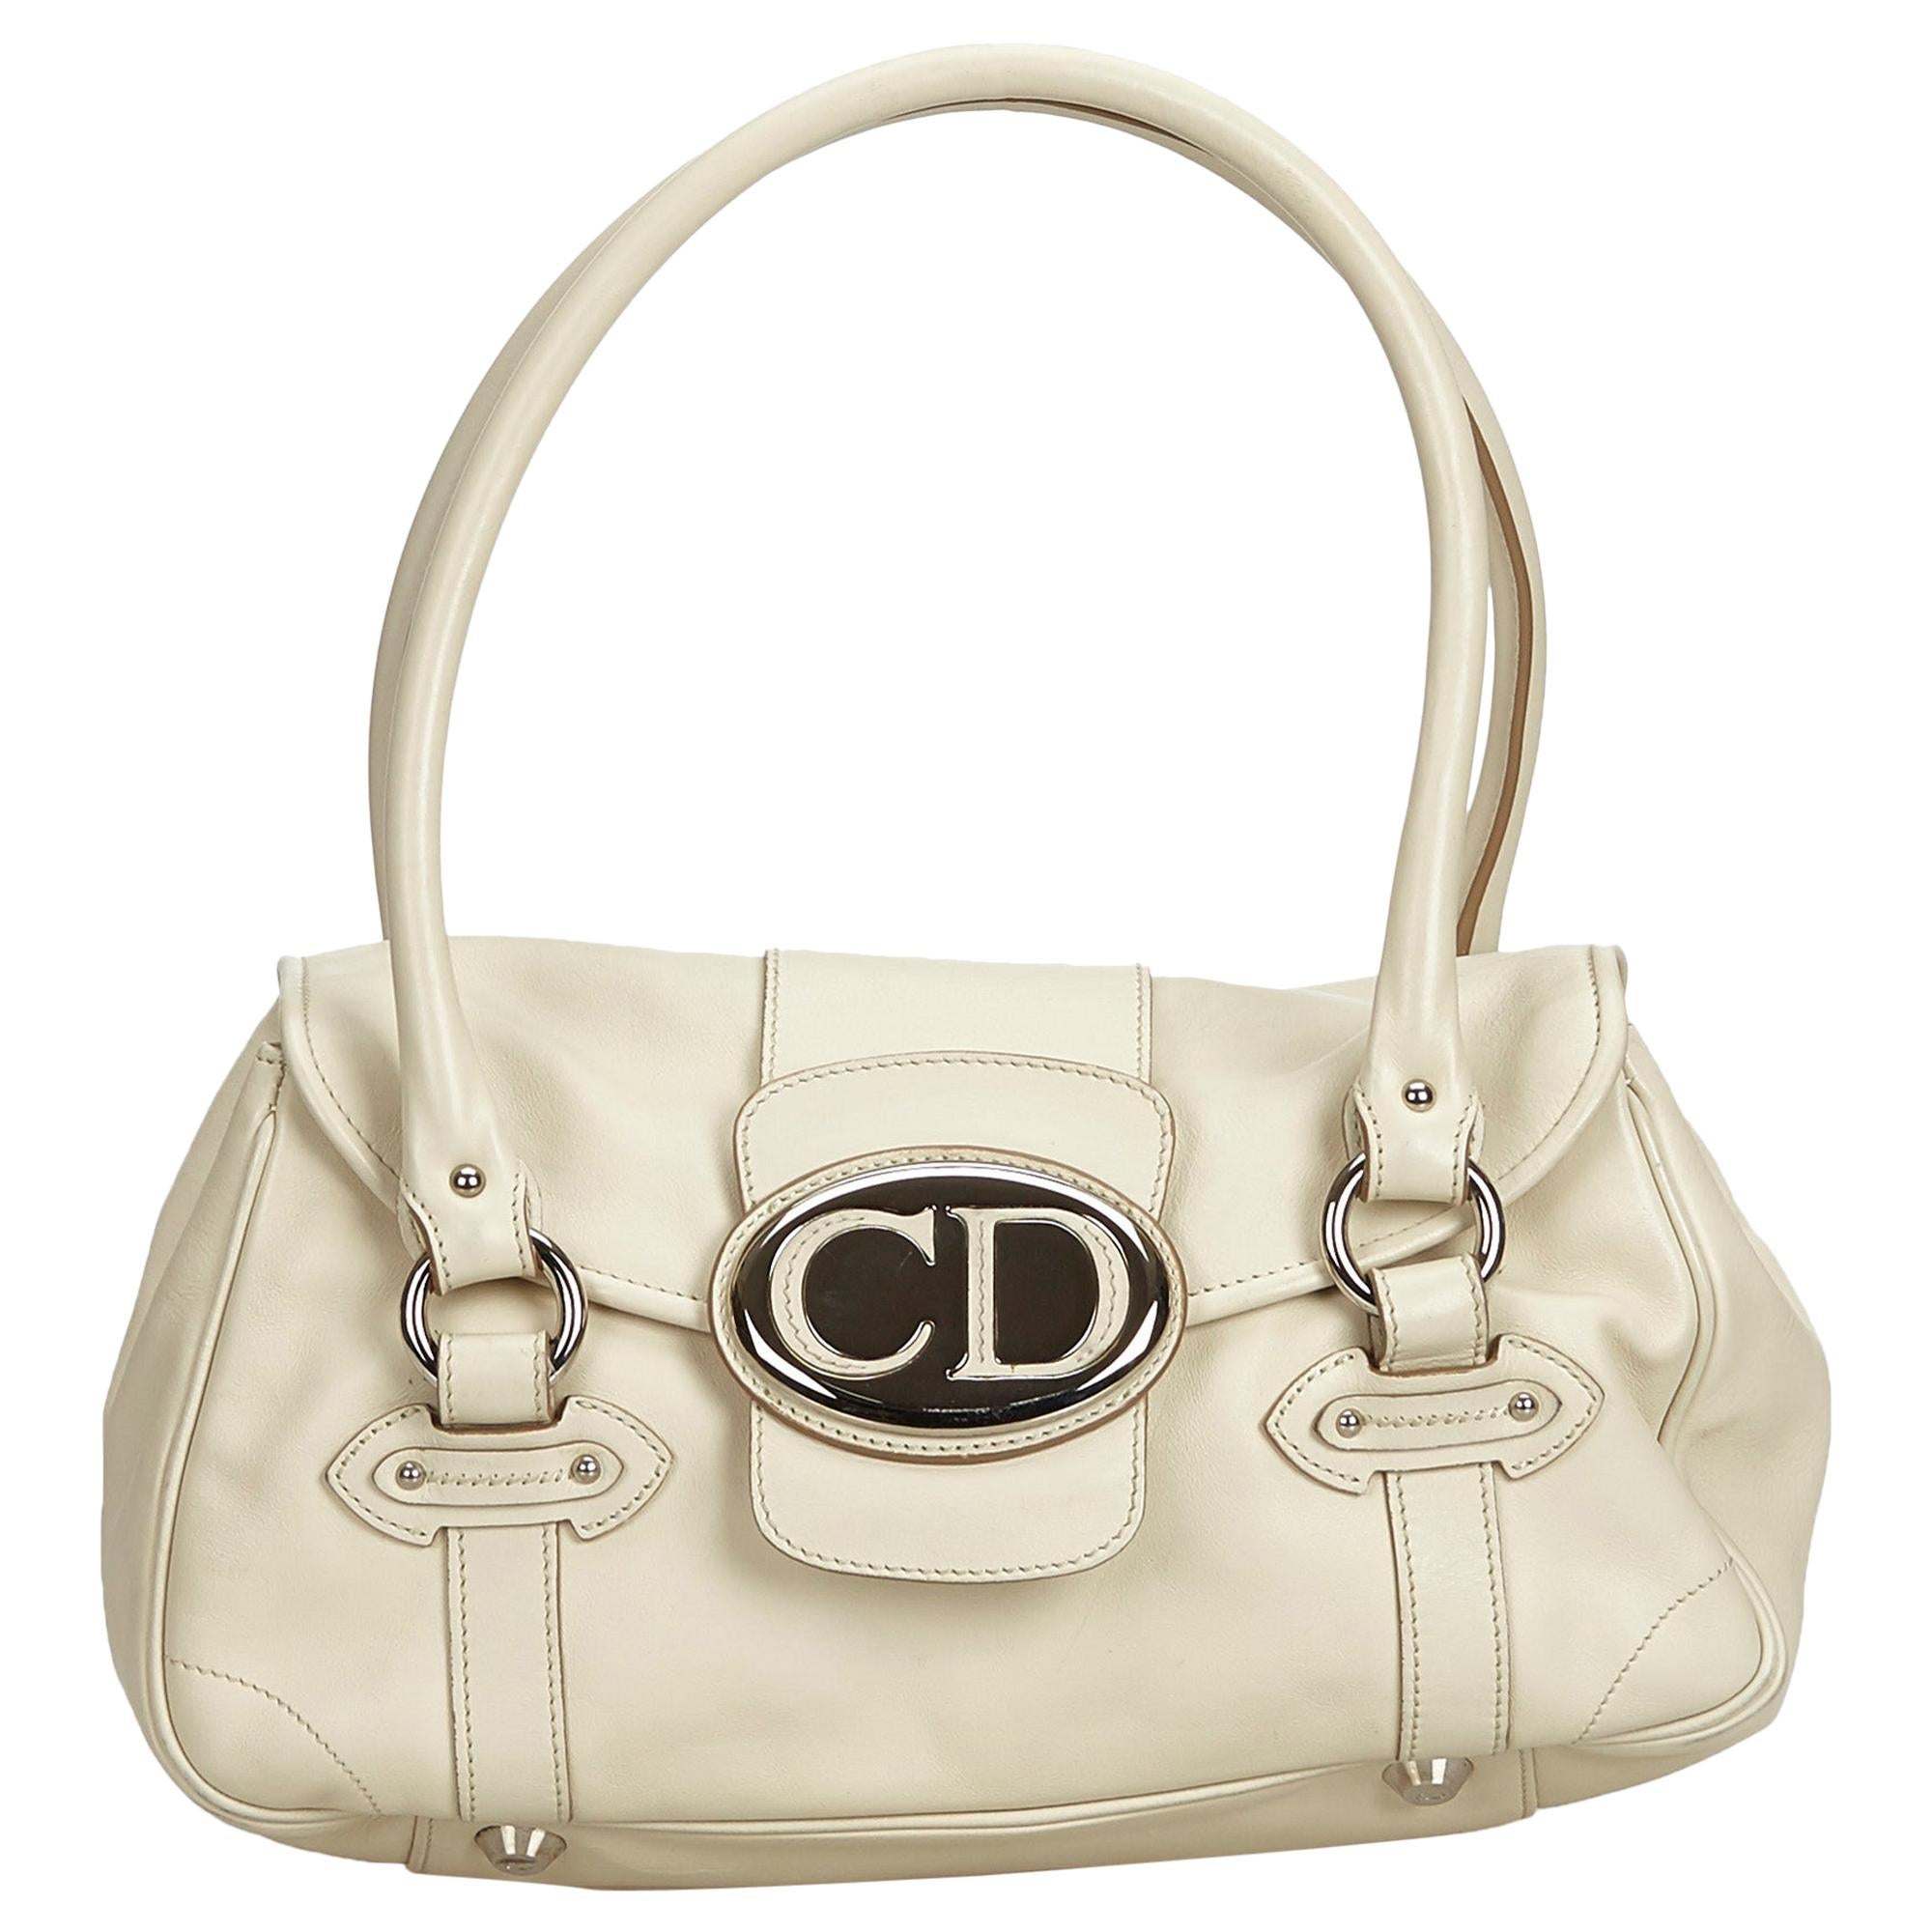 Vintage Authentic Dior Leather Handbag w Dust Bag Authenticity Card MEDIUM 